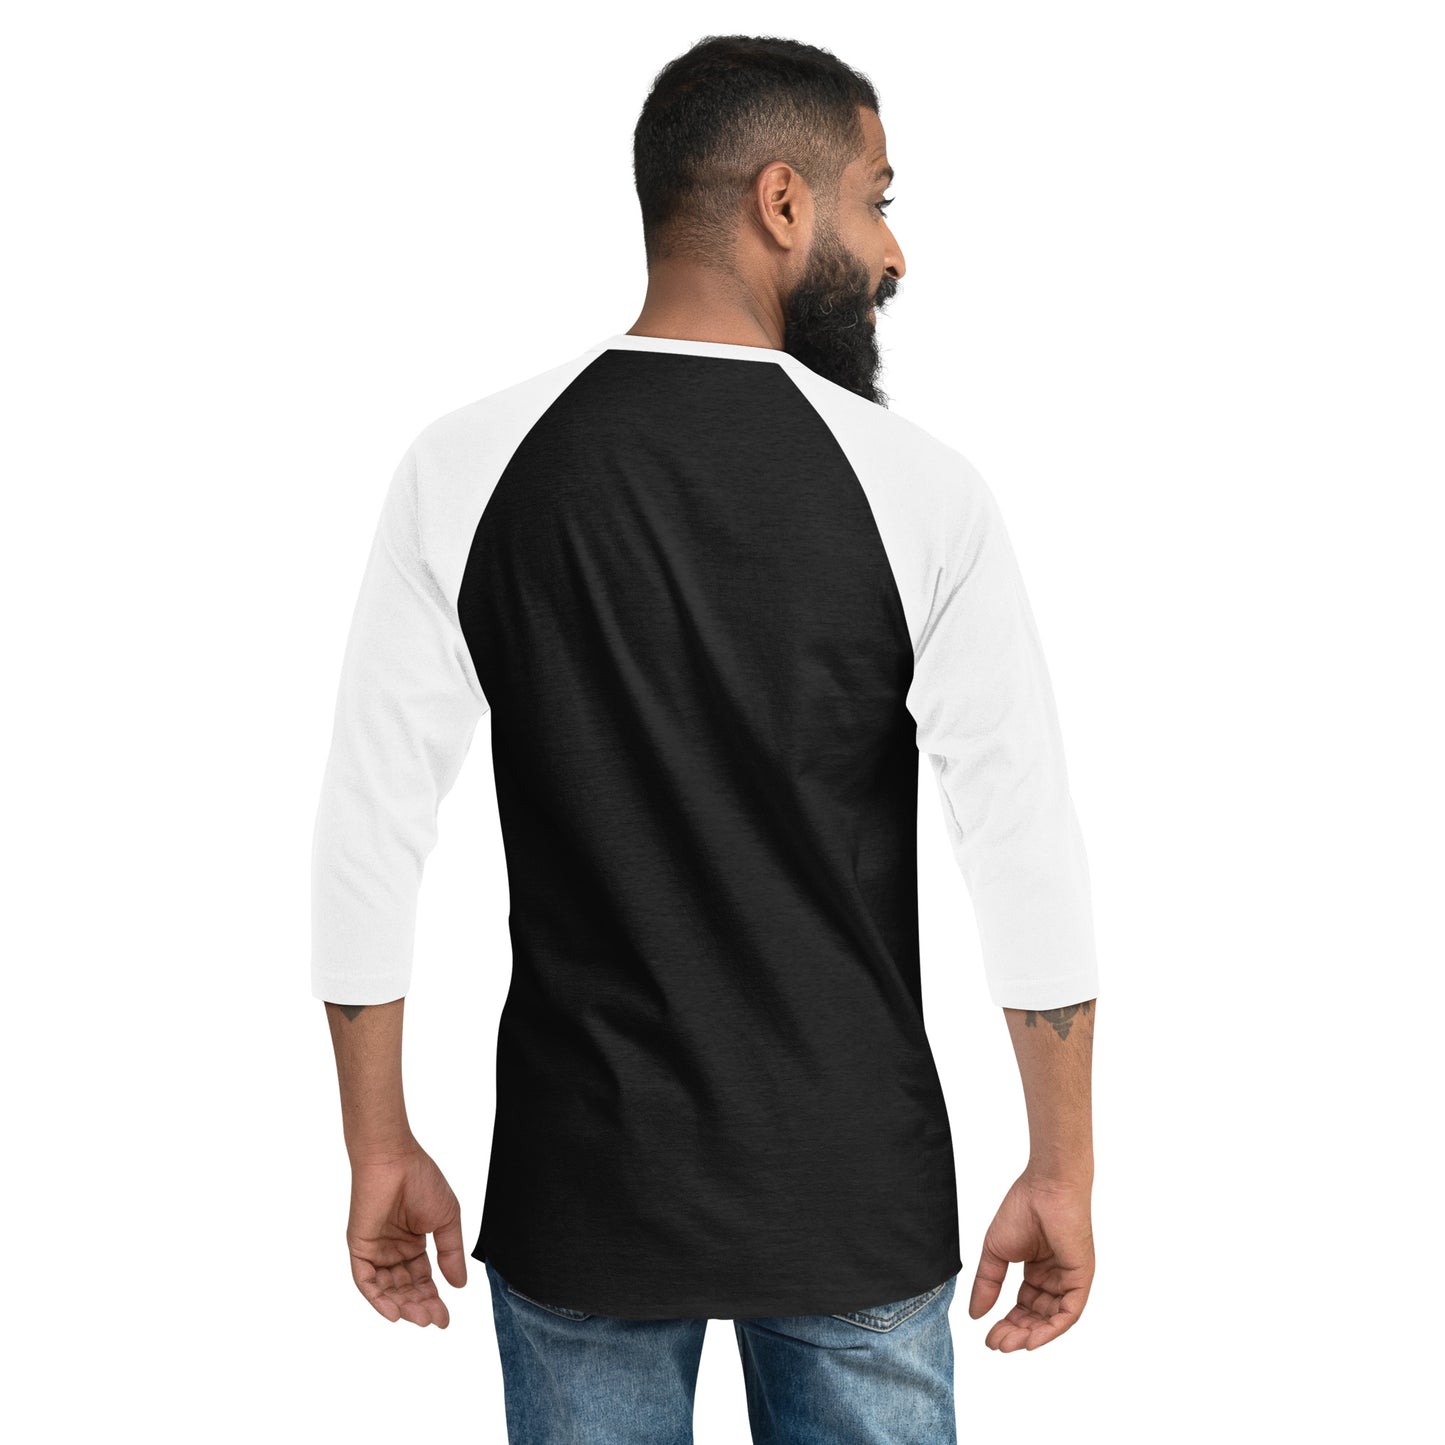 Solutions and Meltdowns Unisex 3/4 Sleeve Raglan Baseball Shirt